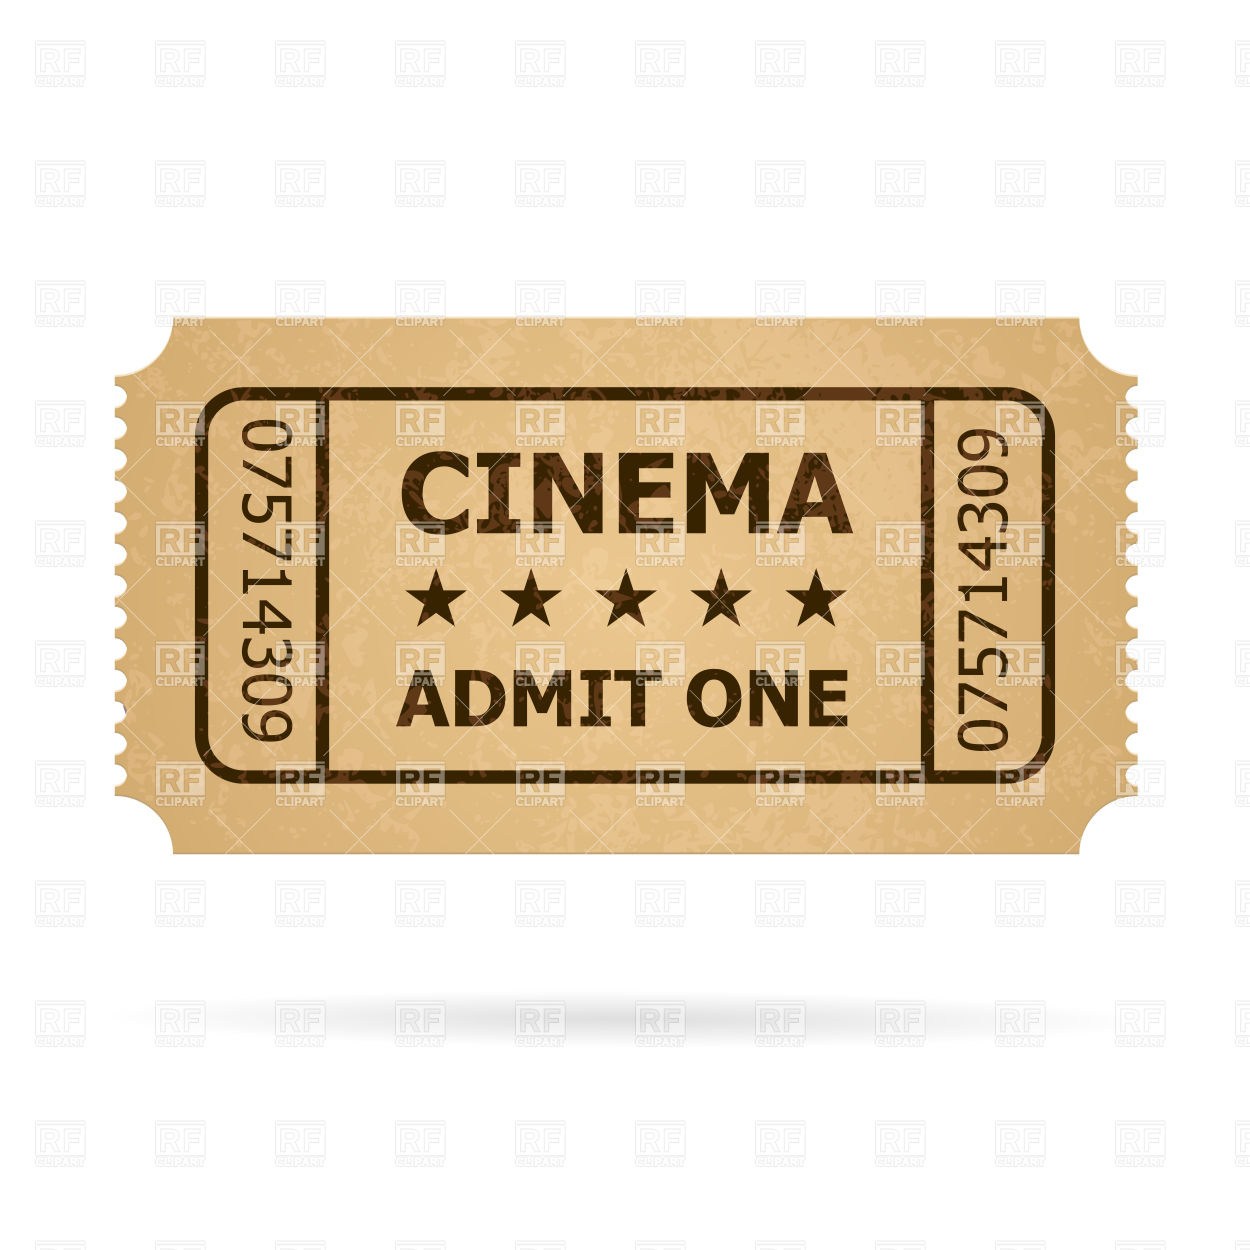 Retro Cinema Cardboard Ticket 6453 Objects Download Royalty Free